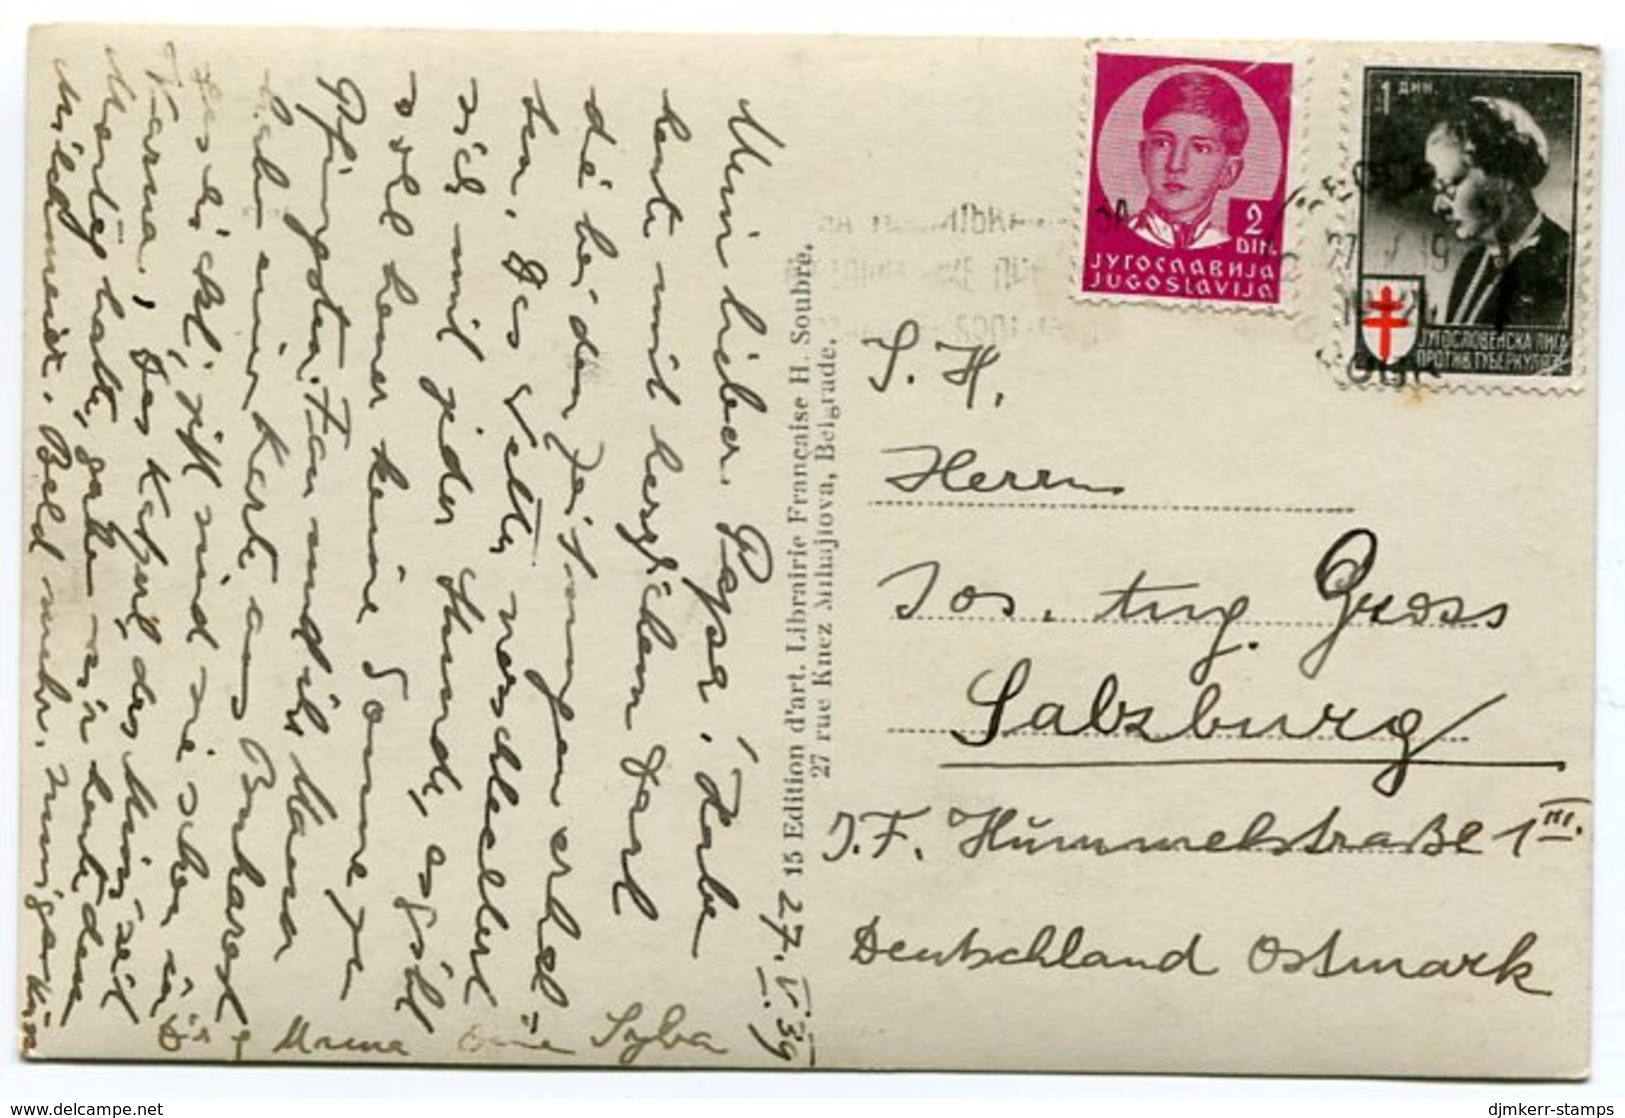 YUGOSLAVIA 1939 Anti-TB League Charity Label Used On Postcard. - Wohlfahrtsmarken